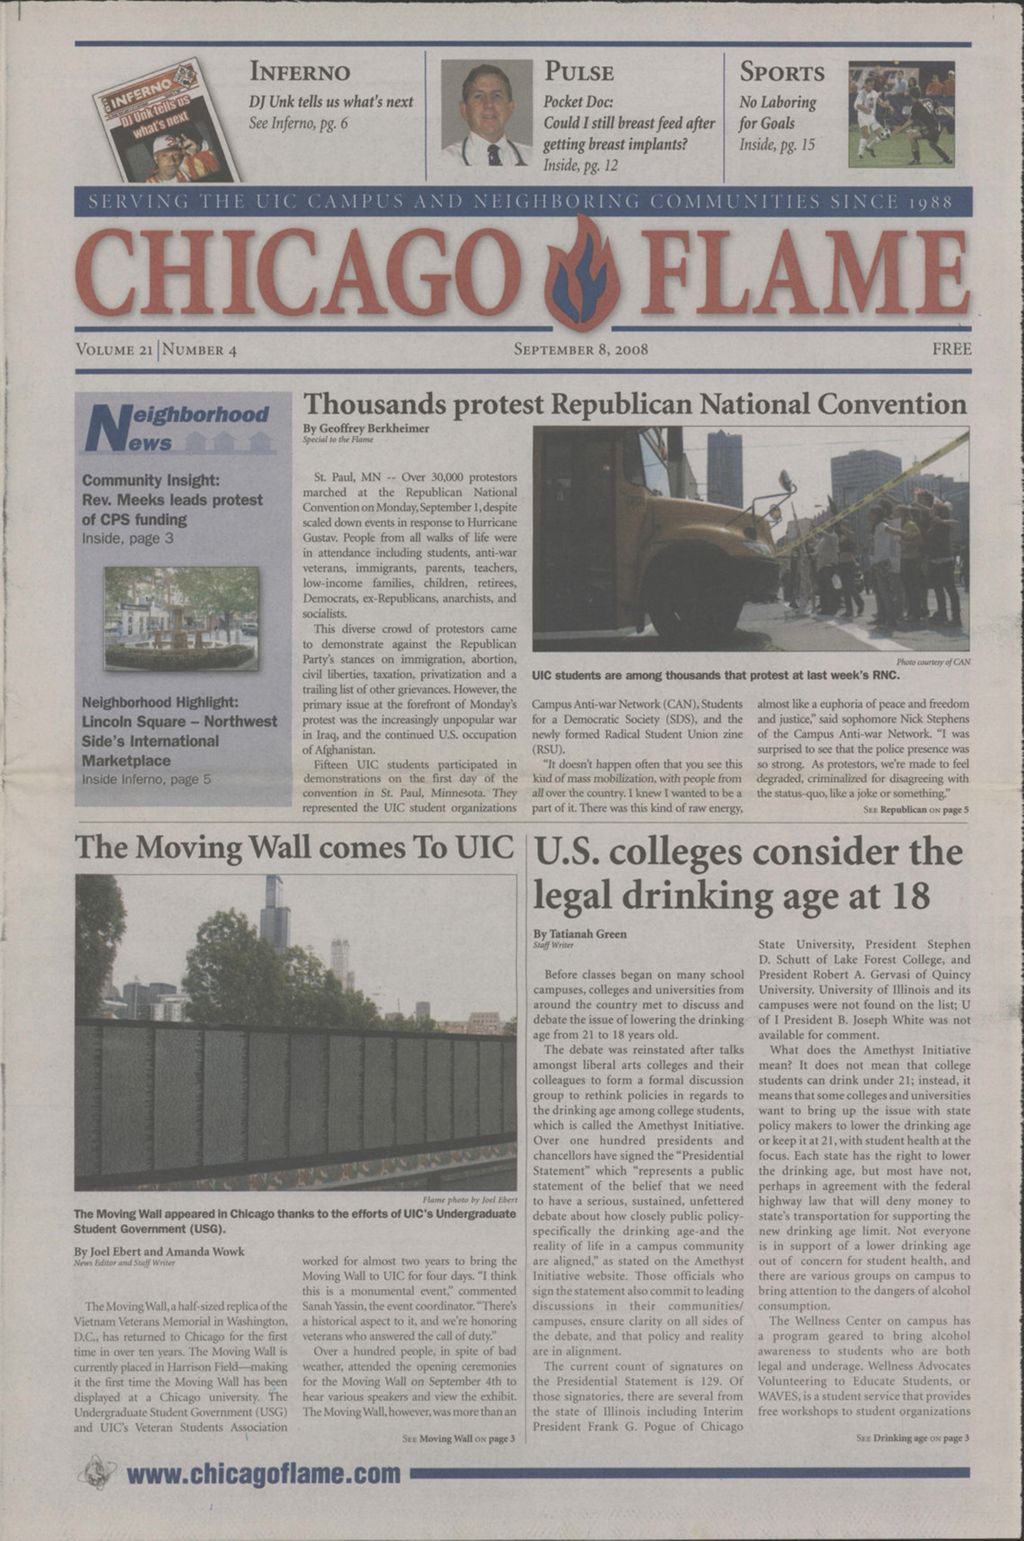 Chicago Flame (September 8, 2008)